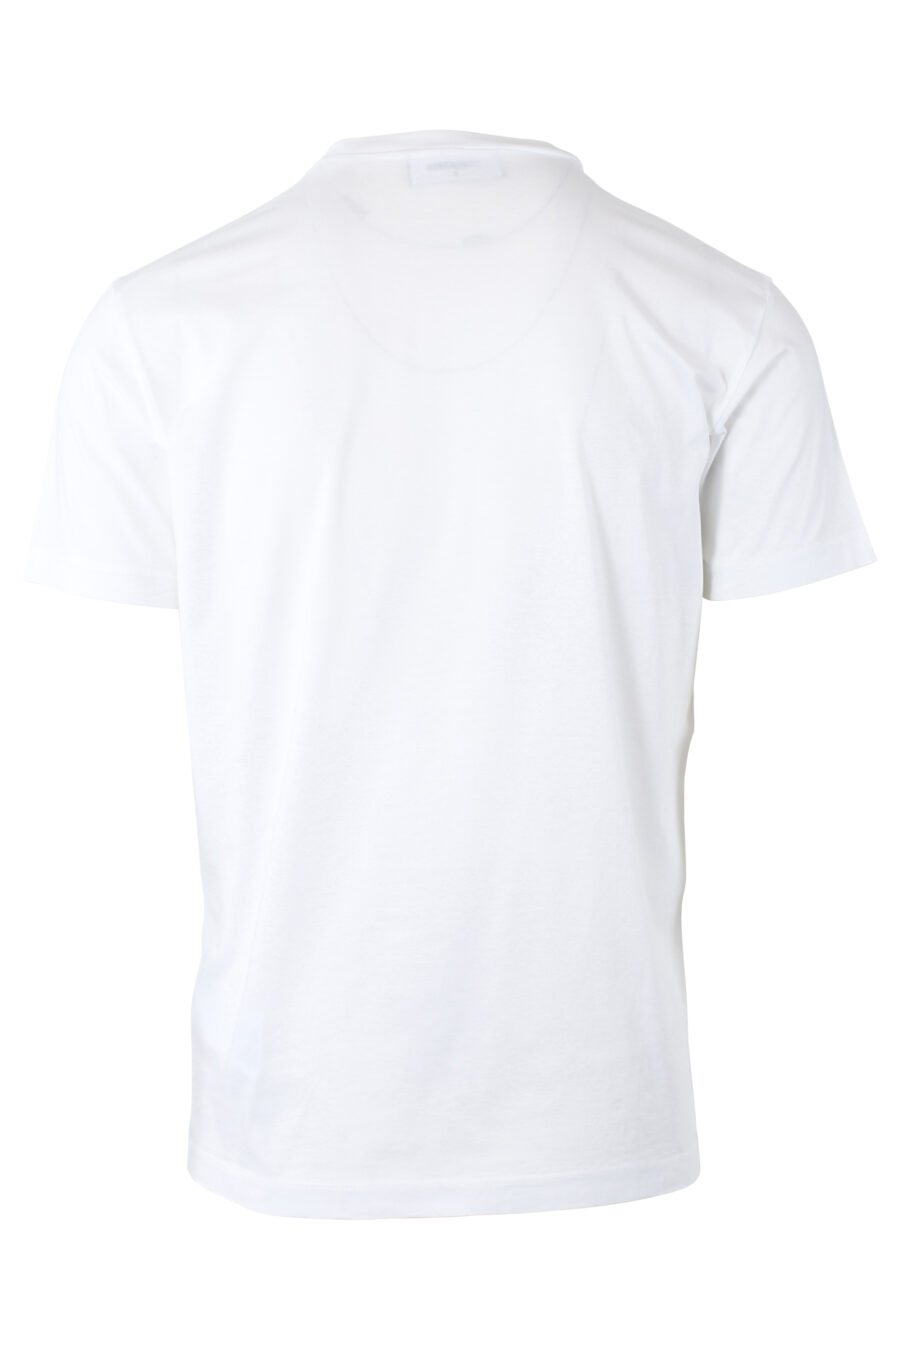 Camiseta blanca con maxilogo "i can't" - IMG 1146